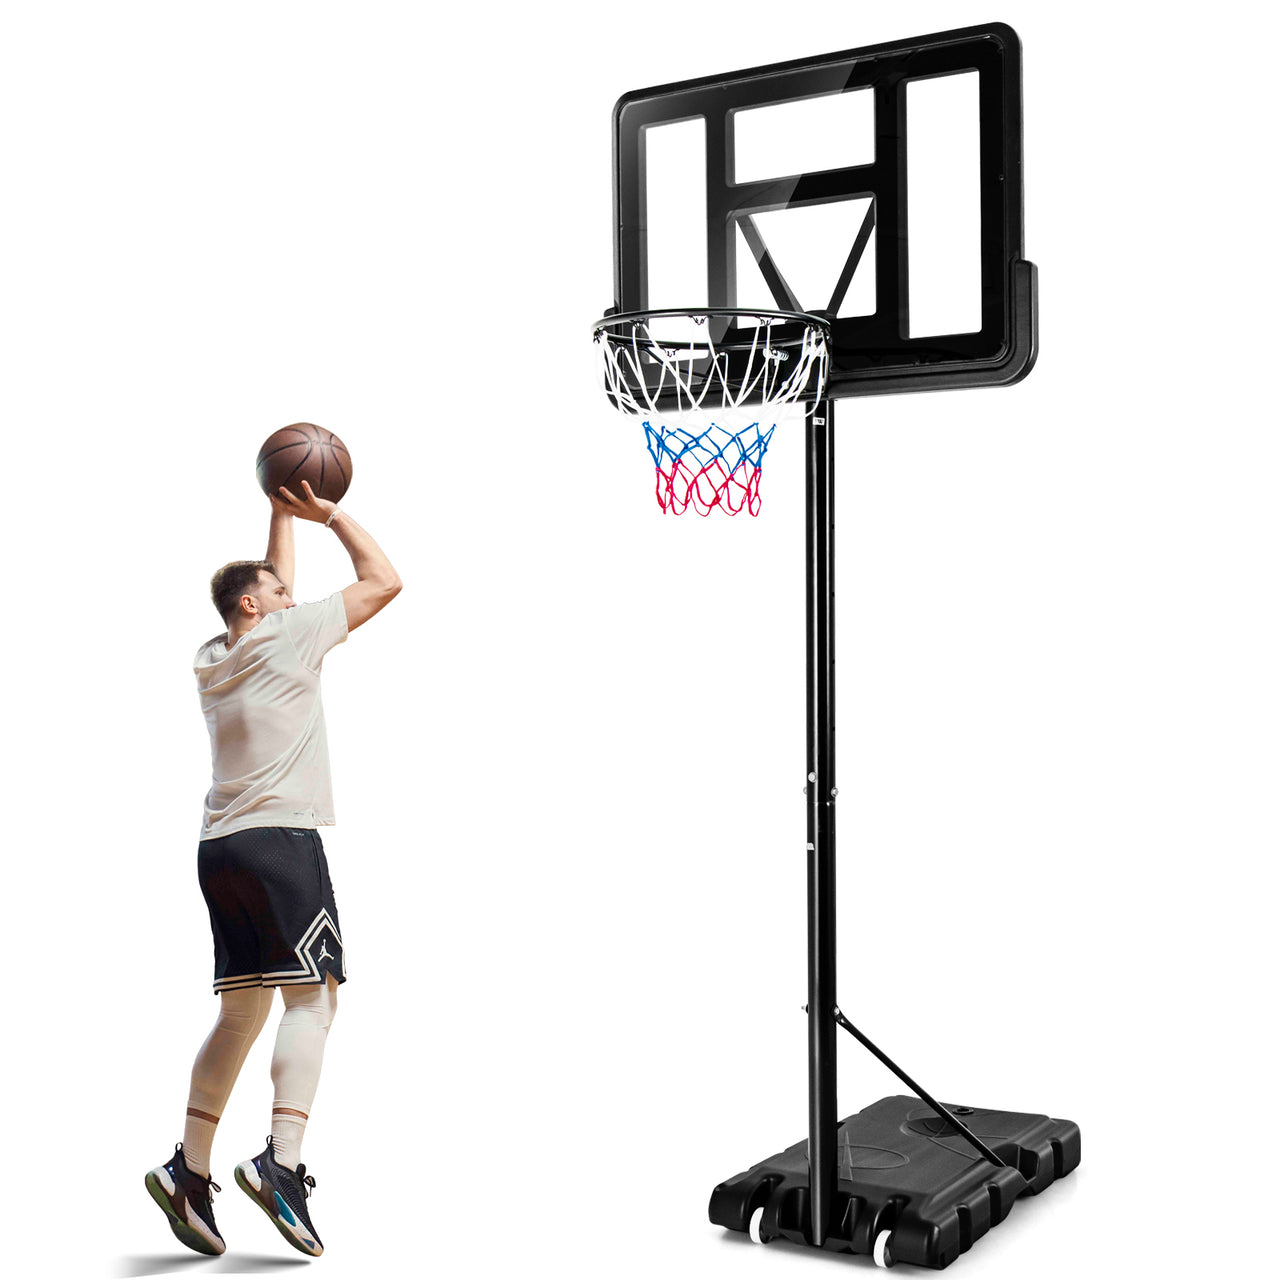 Adjustable Portable Basketball Hoop Stand with Shatterproof Backboard Wheels - Gallery View 4 of 10